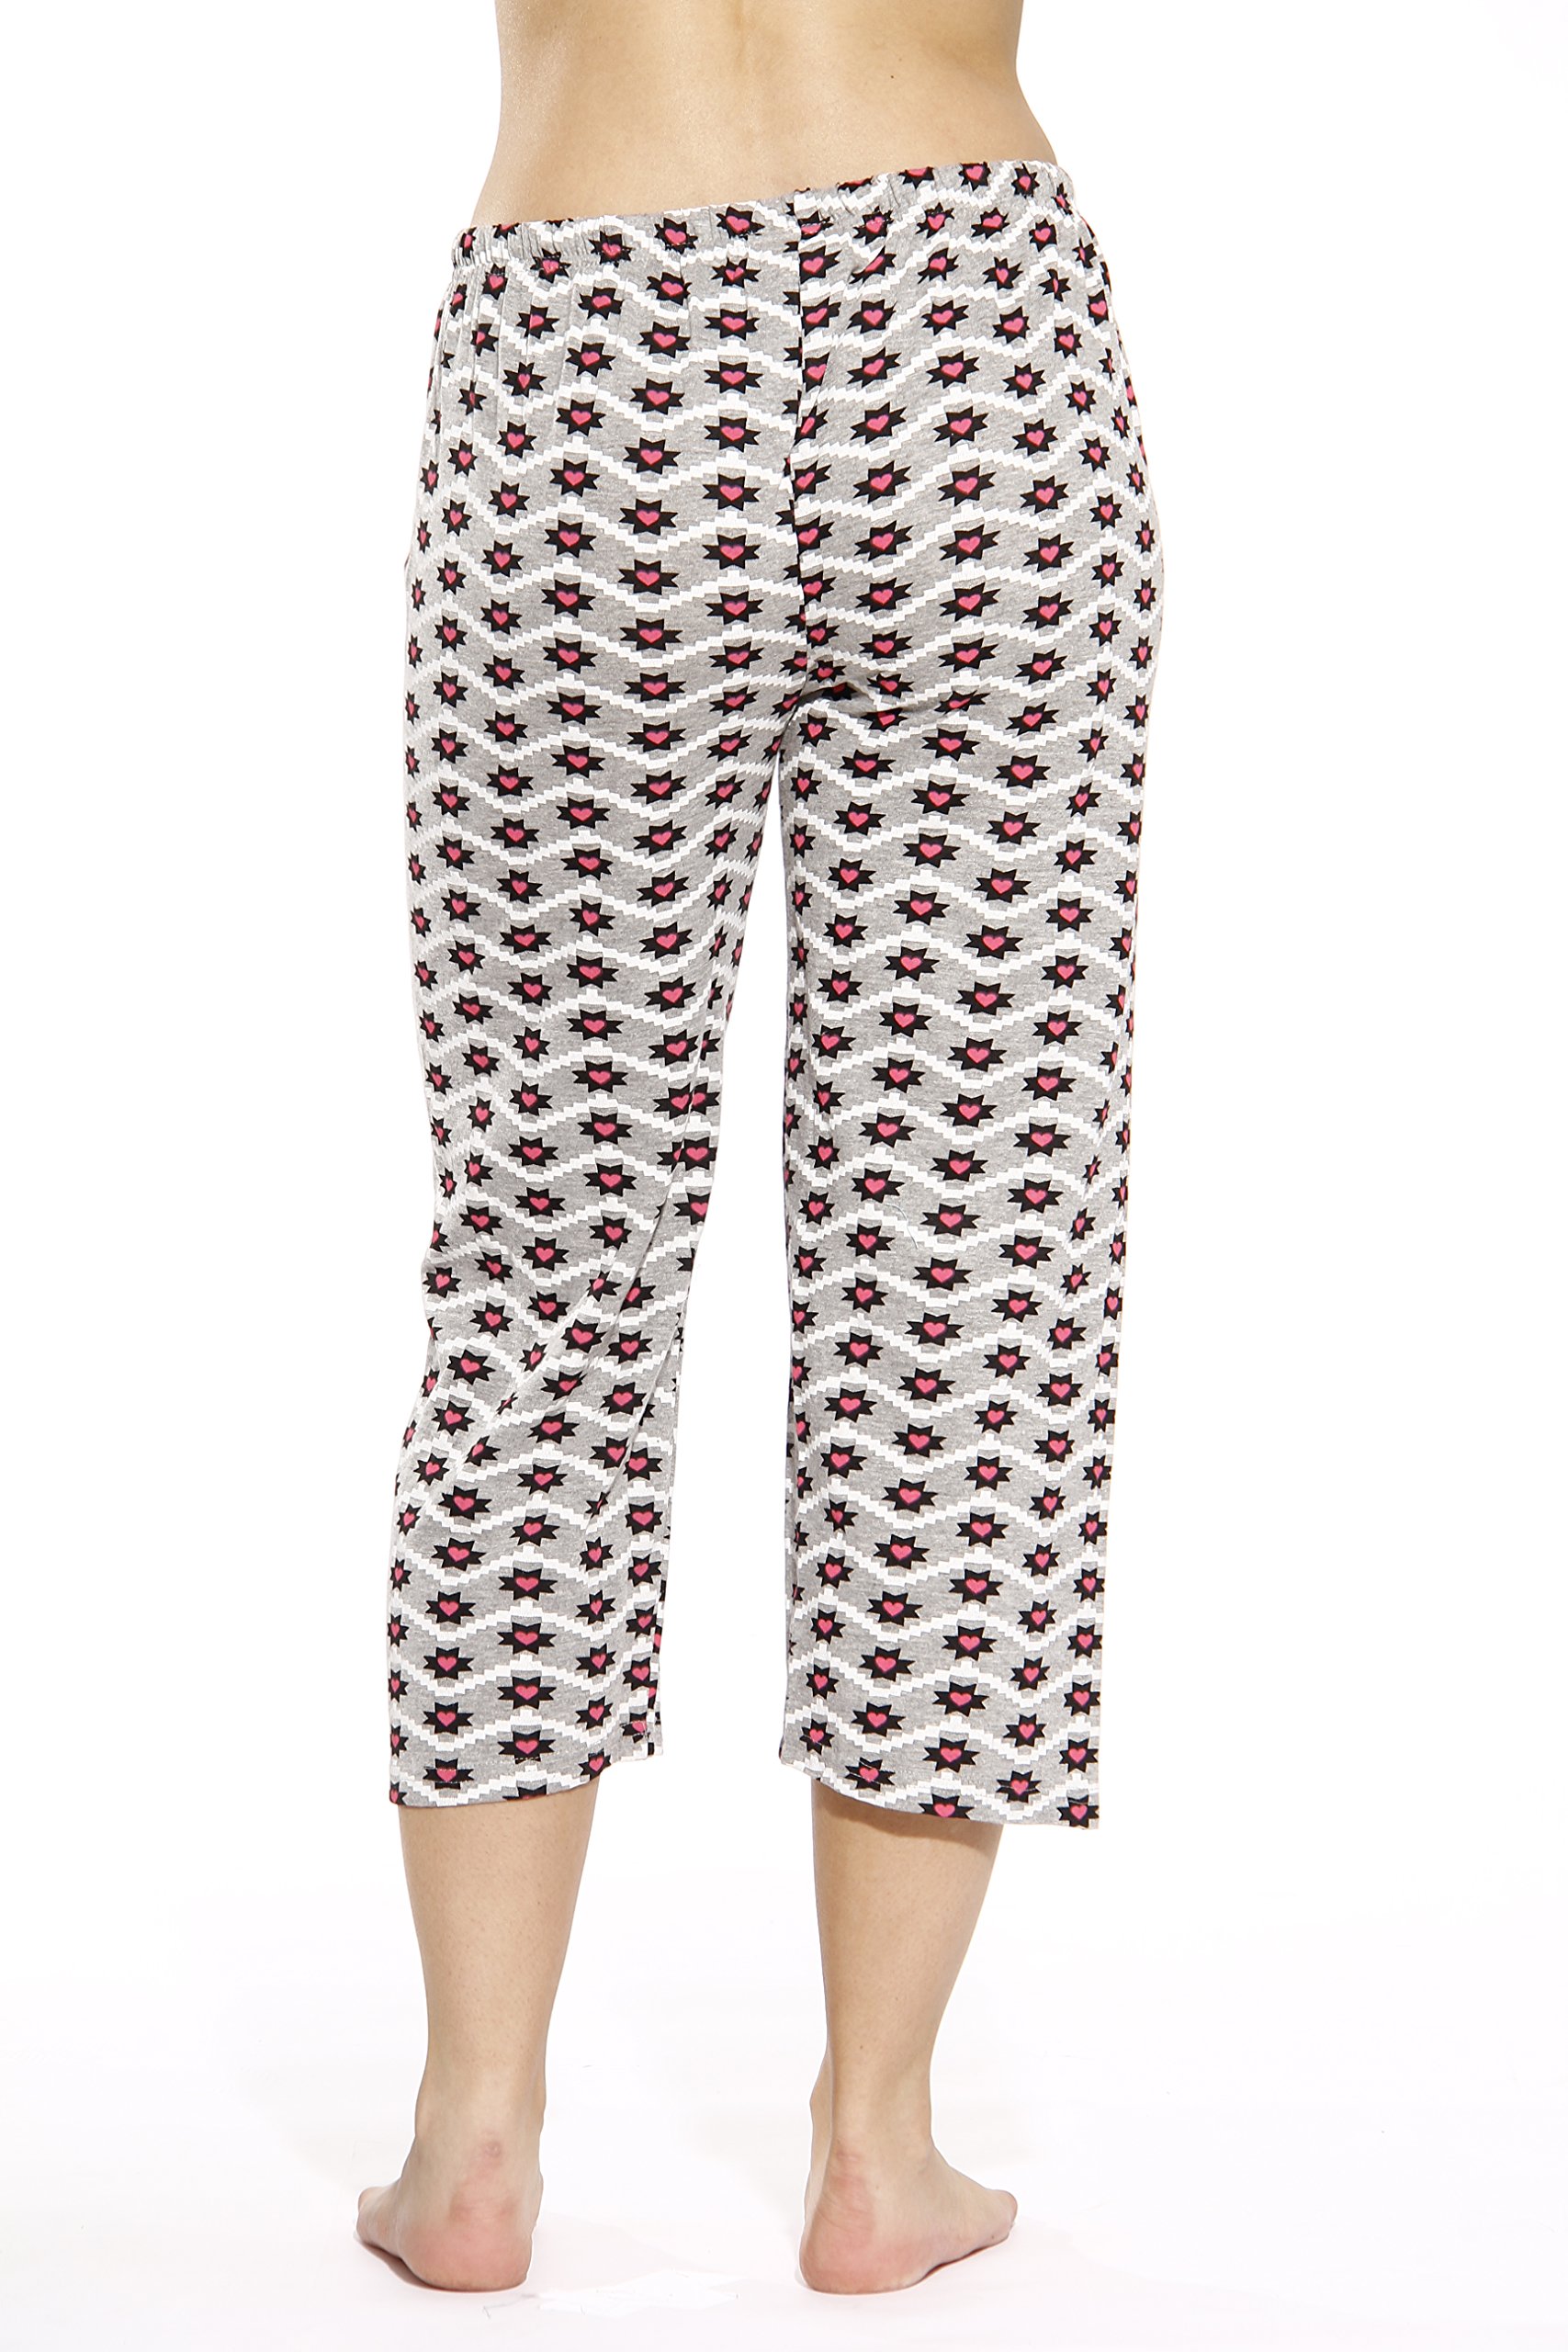 Just Love 100% Cotton Women's Capri Pajama Pants Sleepwear - Comfortable  and Stylish (Leopard Print, Medium)